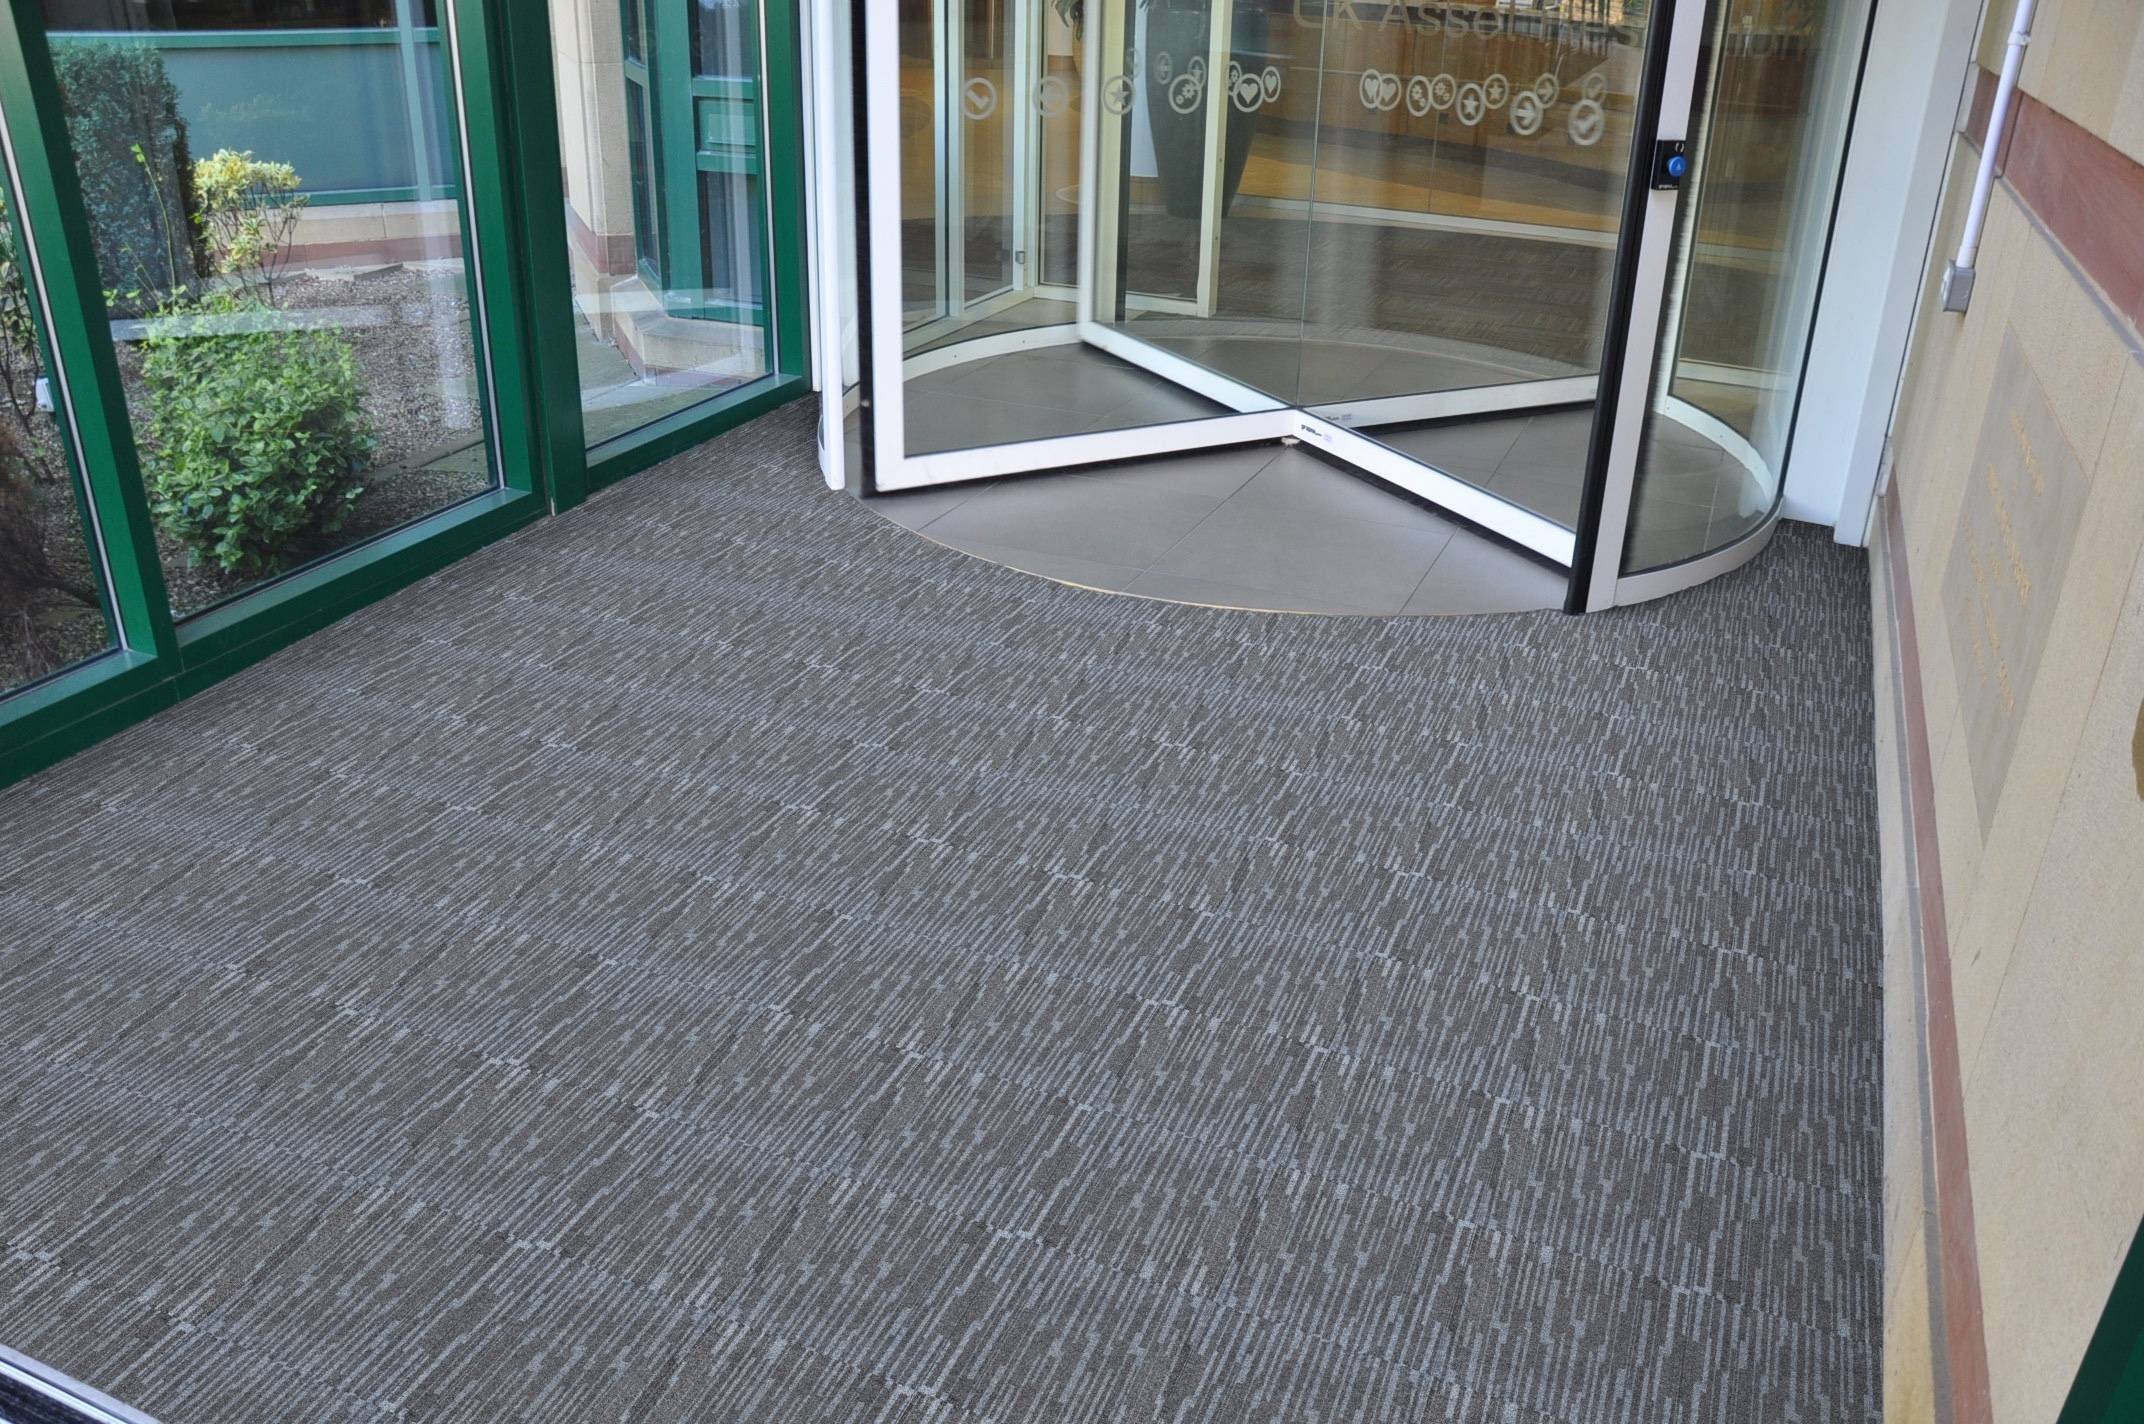 Paragon Workspace Entrance Design Carpet Tile Design 2 Victor 50 x 50 cm